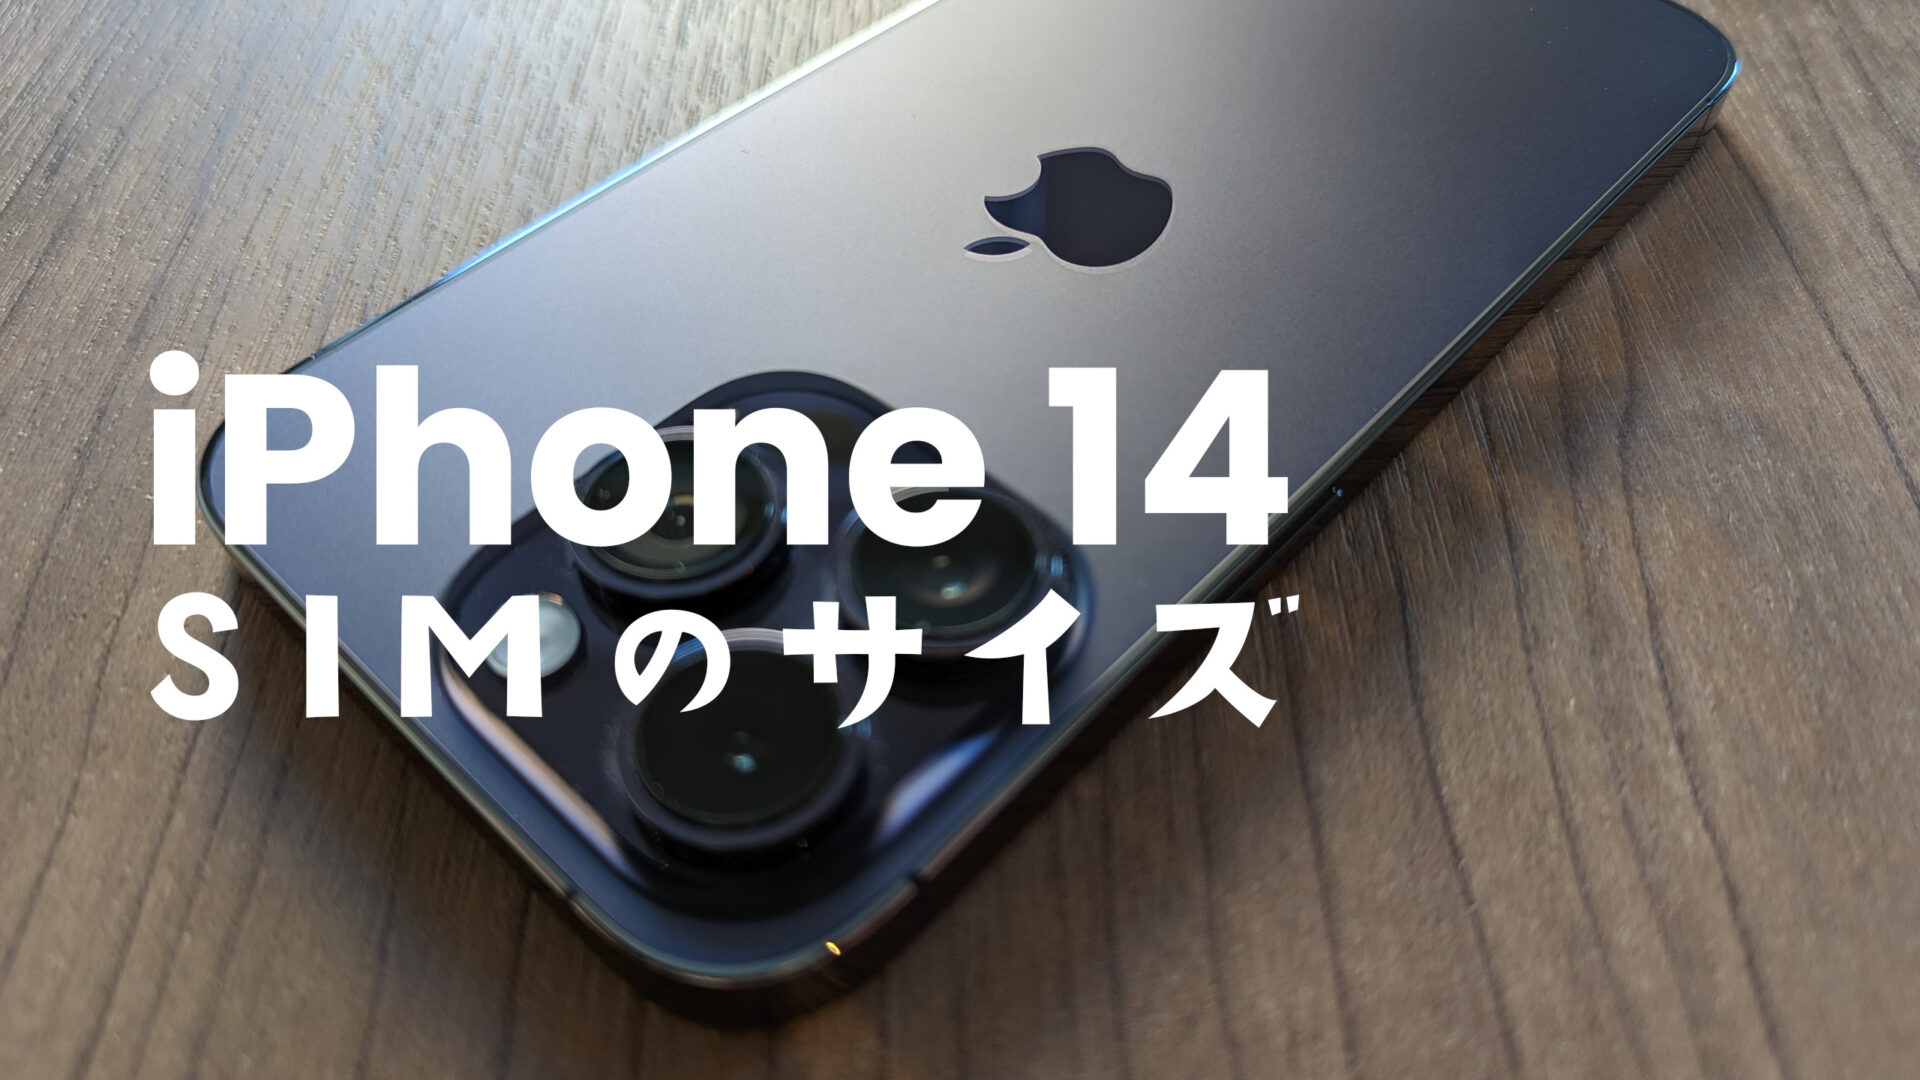 iPhone 14のSIMカードのサイズはnano-SIMが使える？iPhone 14 Proは？のサムネイル画像